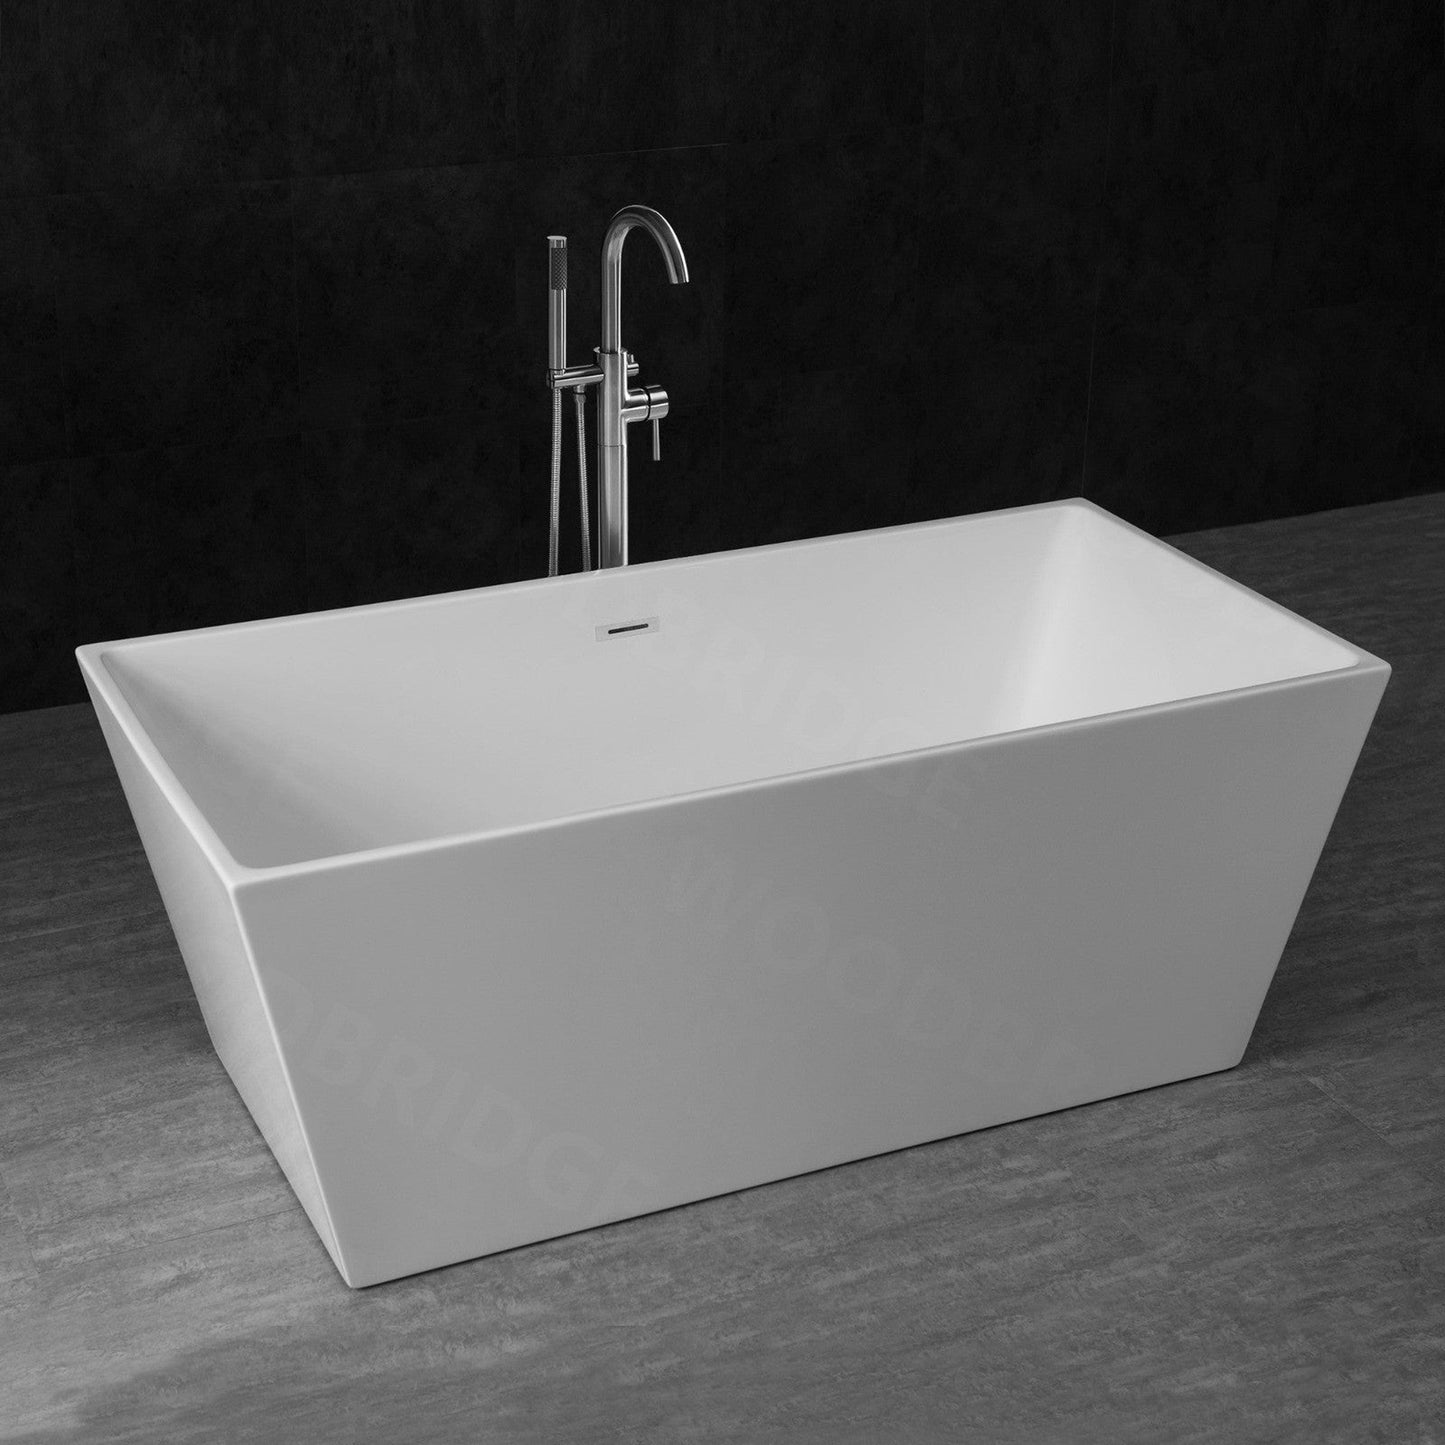 WoodBridge B1412 59" White Acrylic Freestanding Soaking Bathtub With Chrome Drain, Overflow F0071CHVT Tub Filler and Caddy Tray